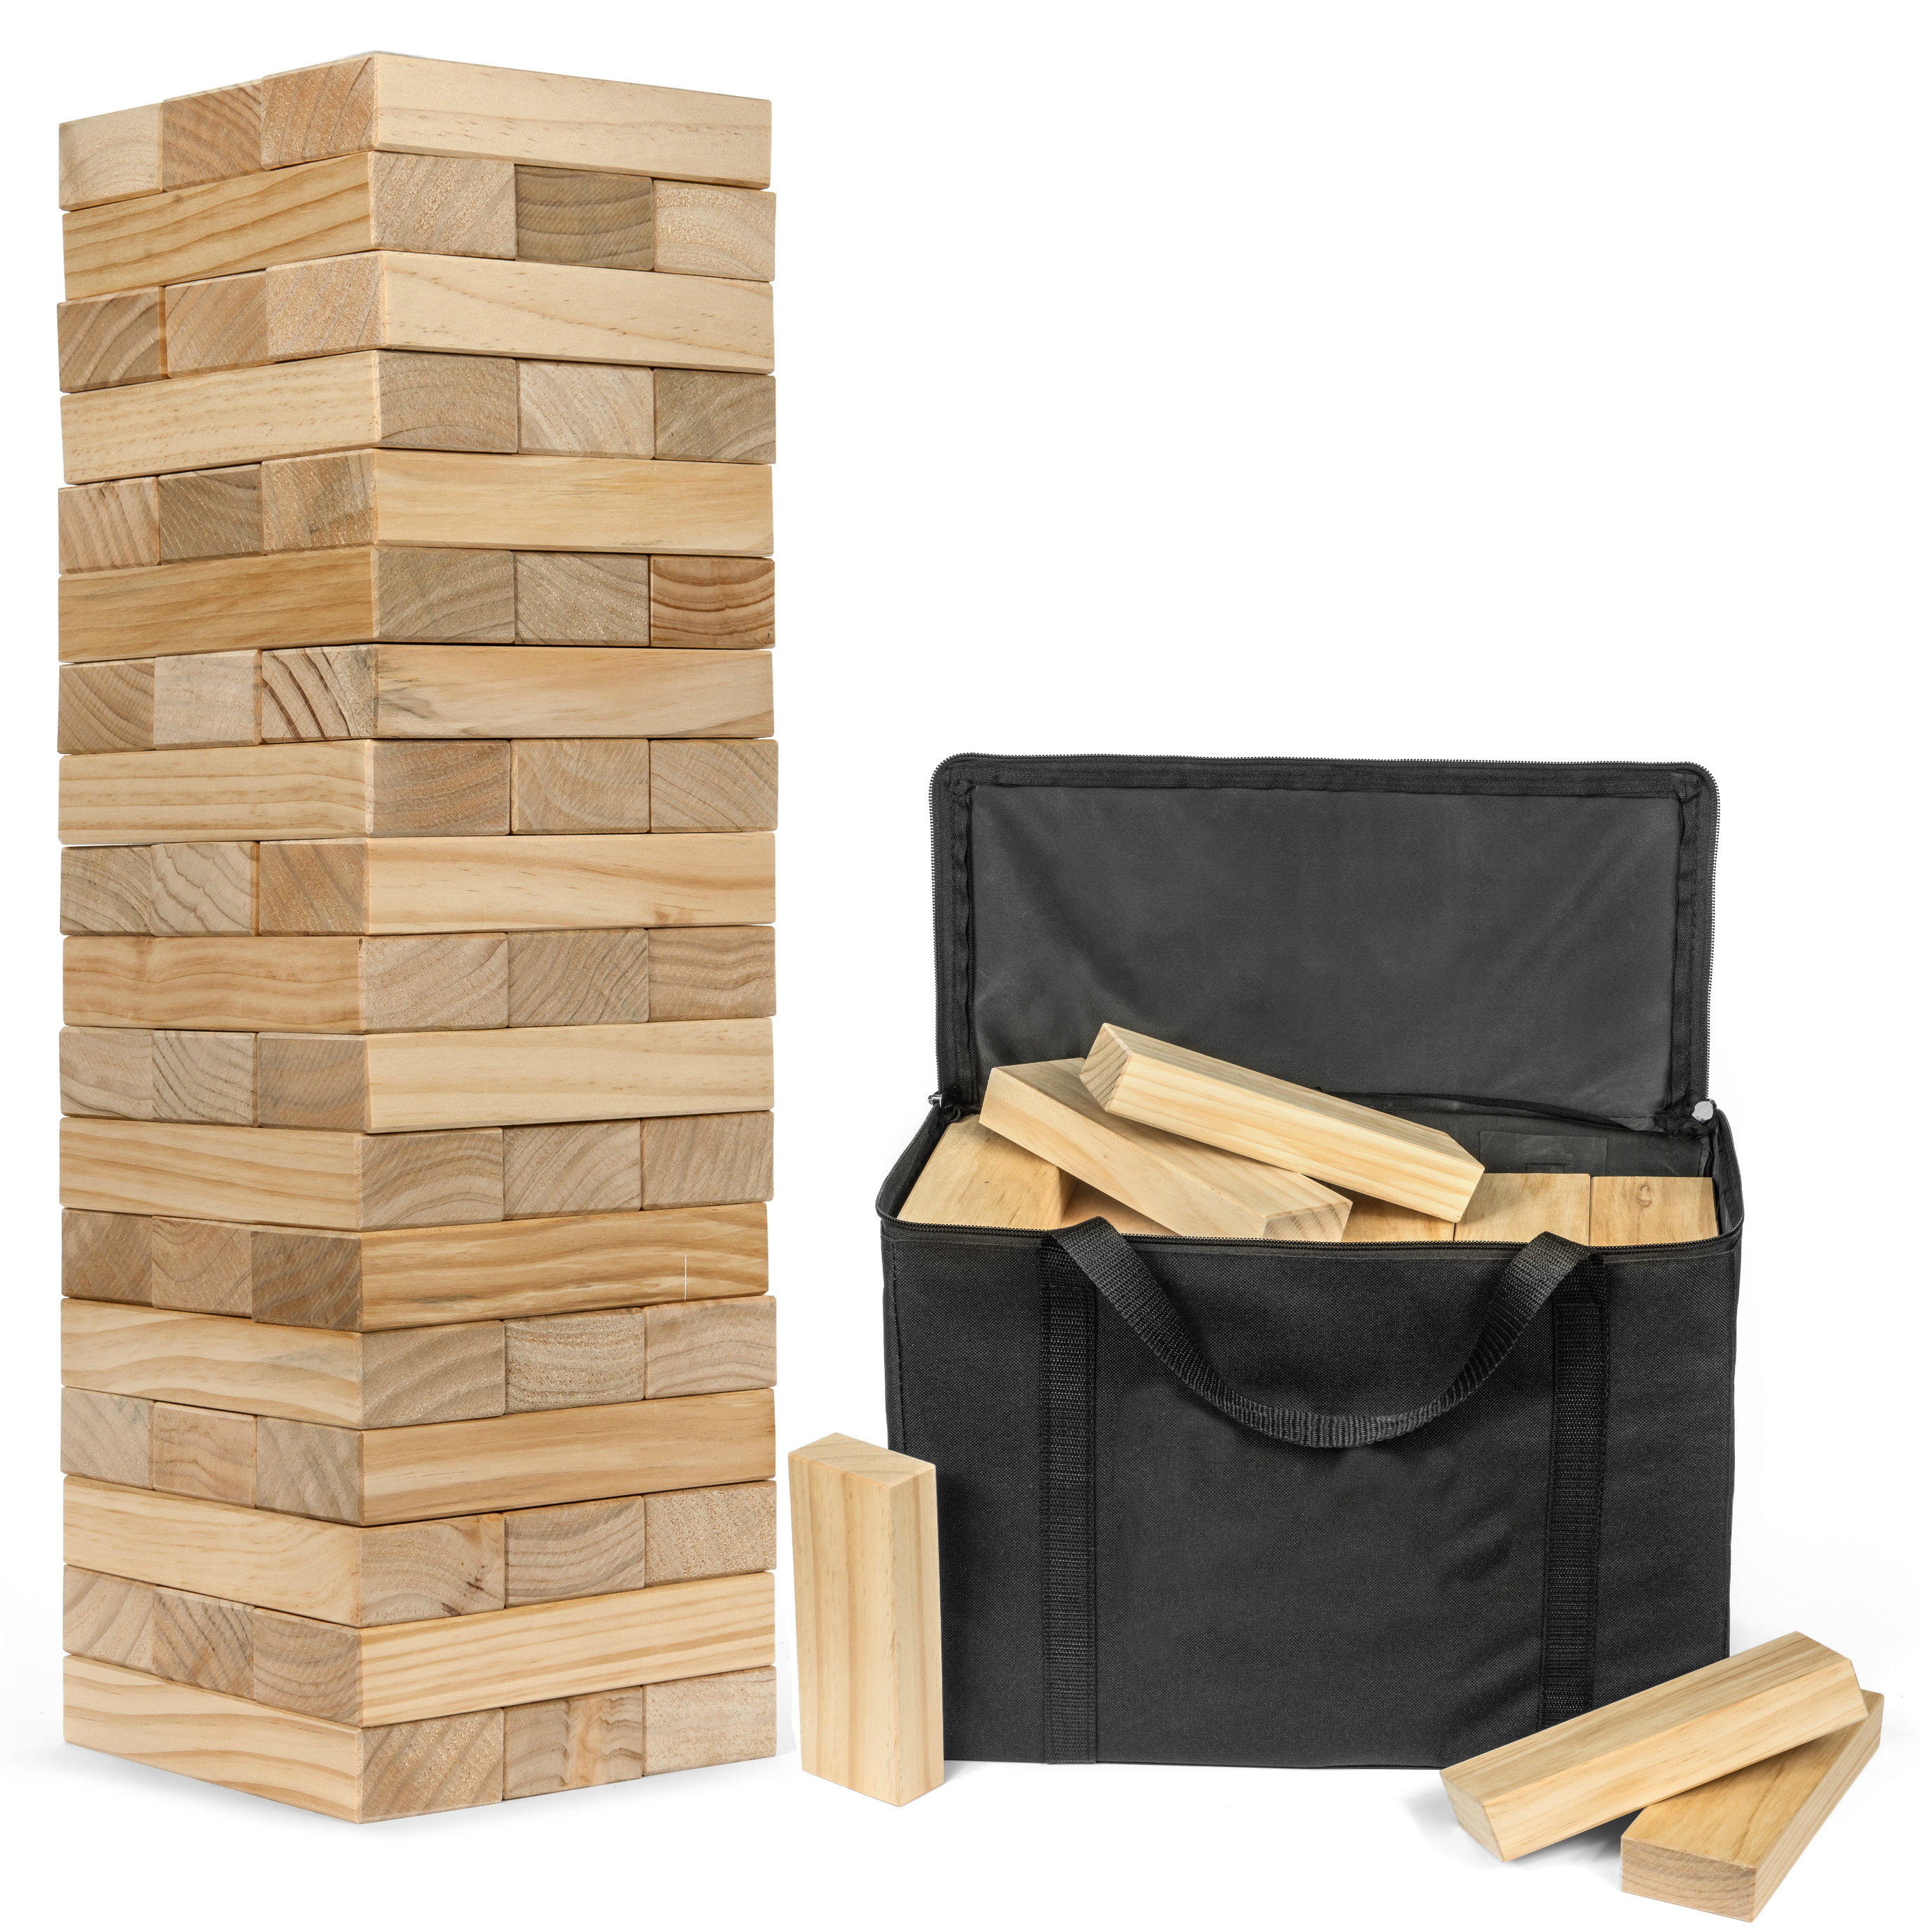 Giant Toppling Tower Game - 60 Blocks - Storage Crate - Indoor/Outdoor Set